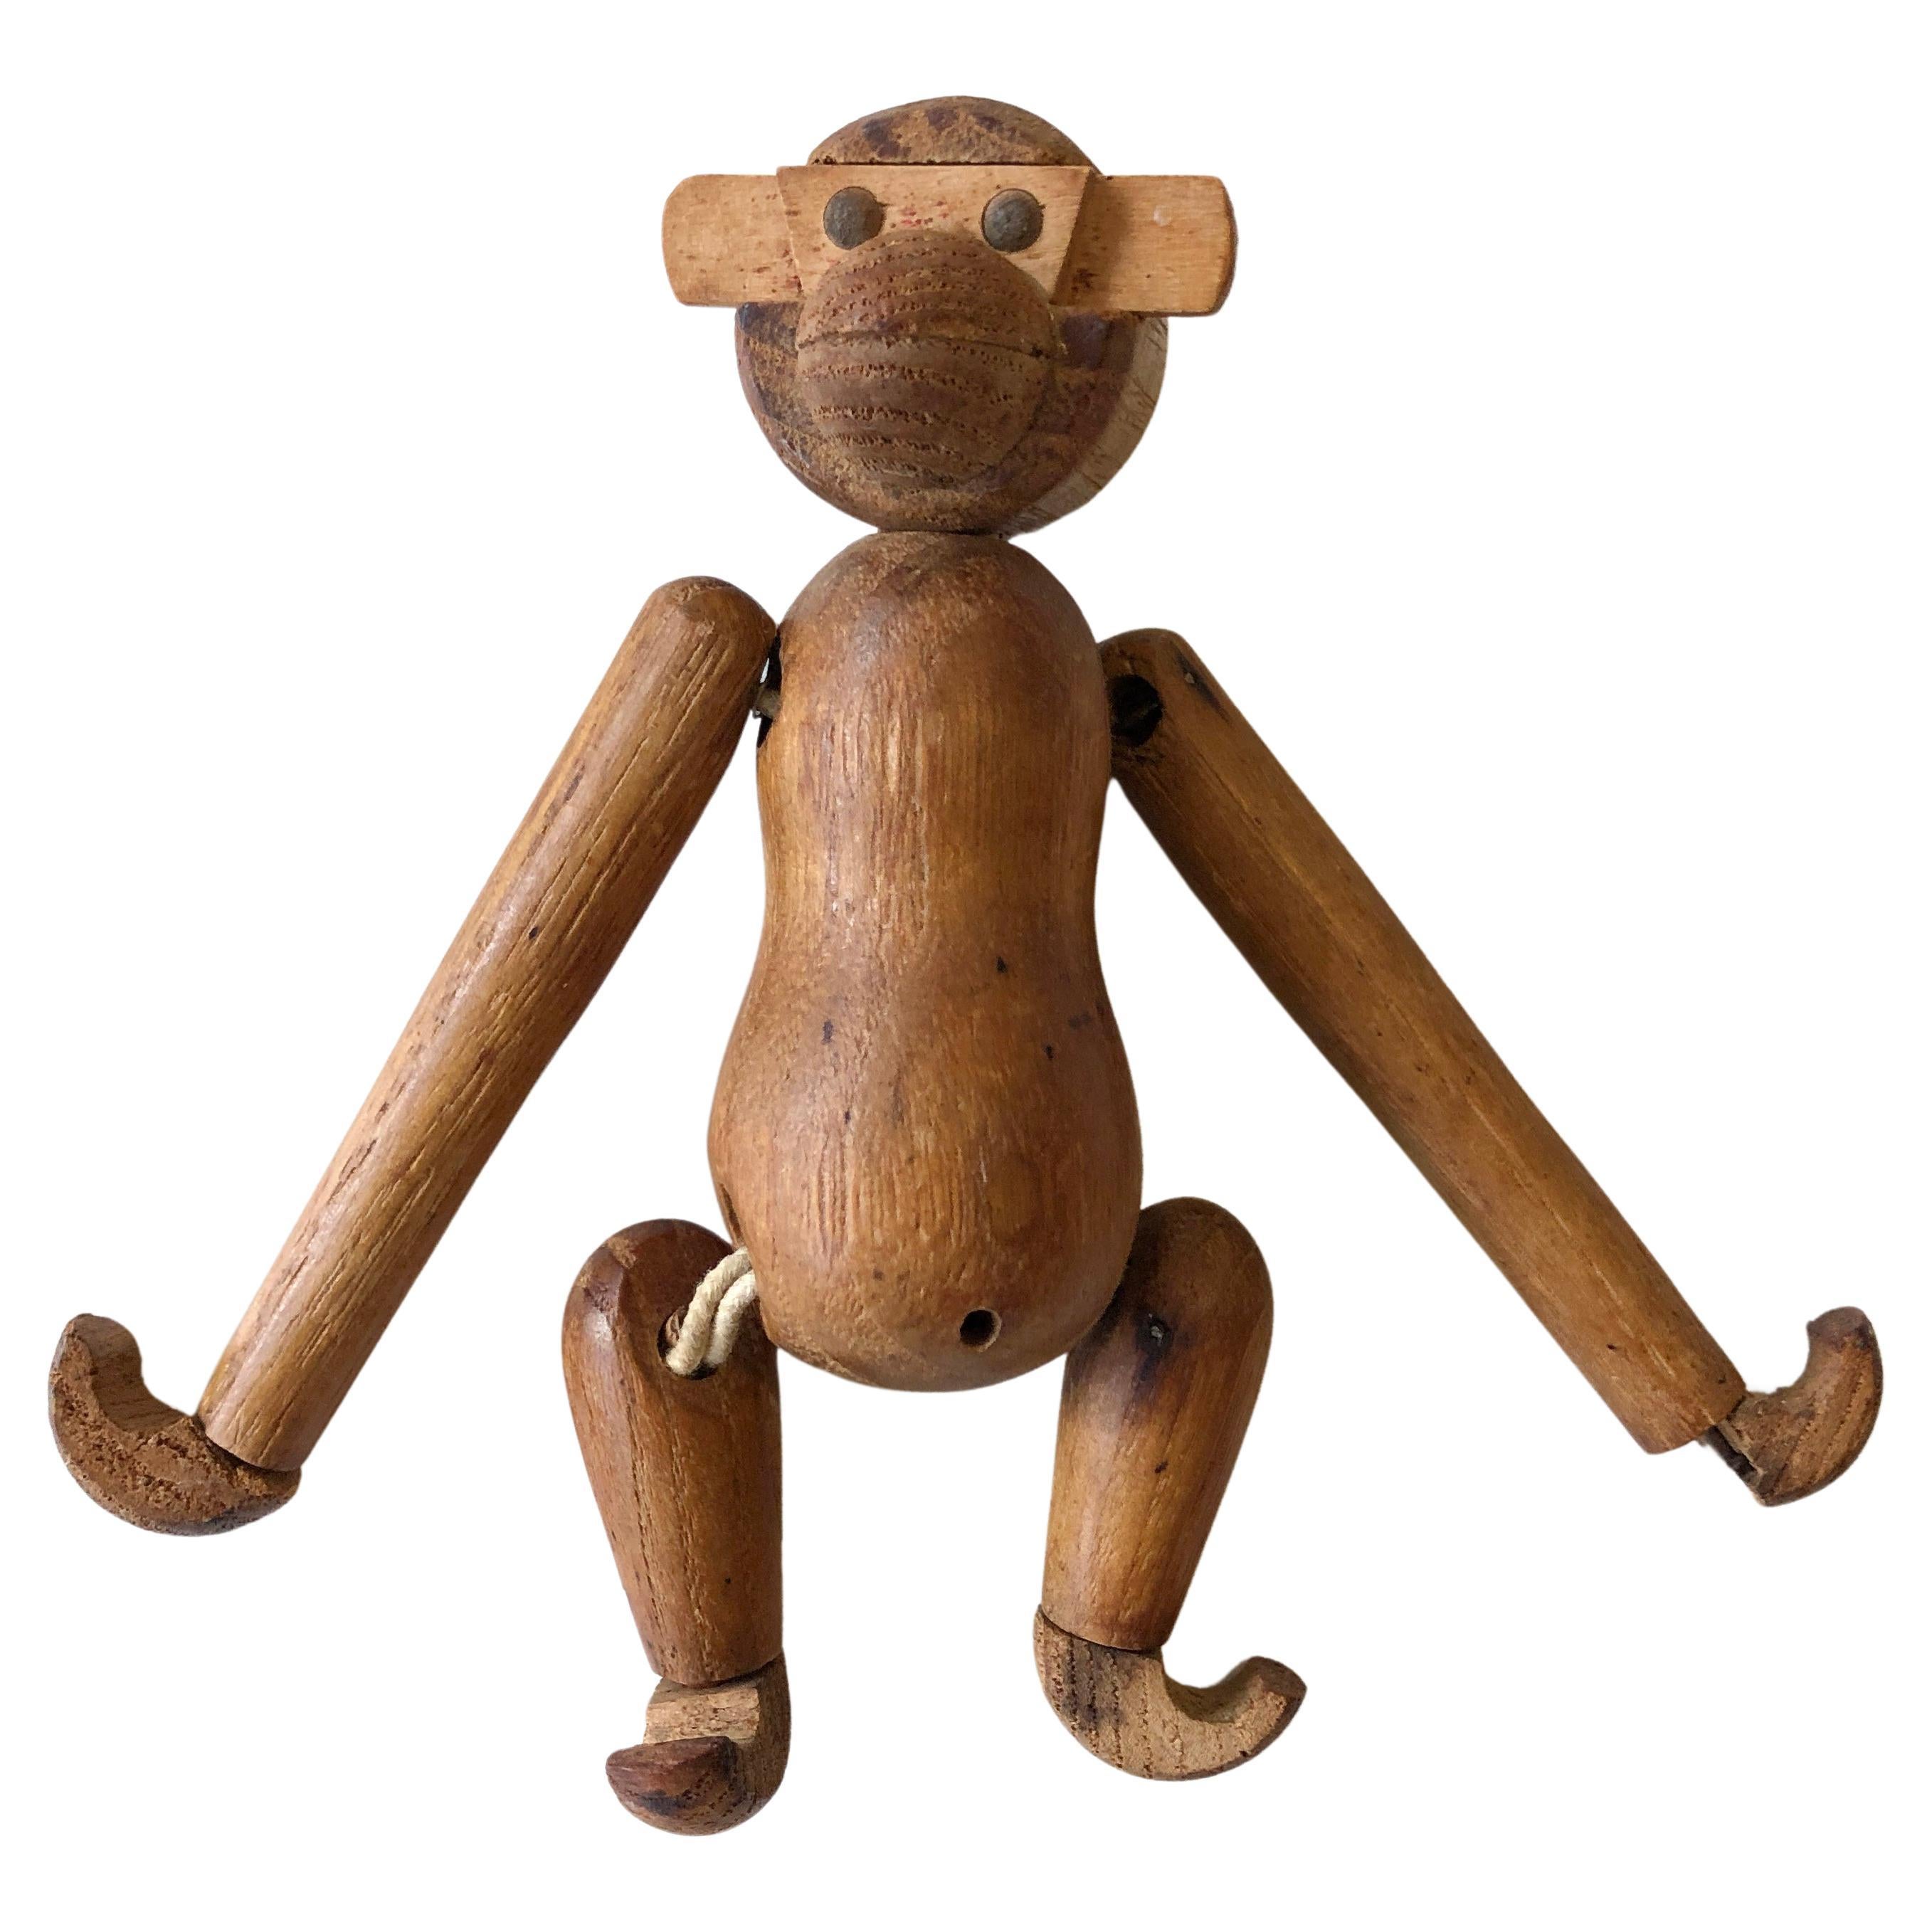 Vintage 1950's small wooden monkey - Kay Bojesen style